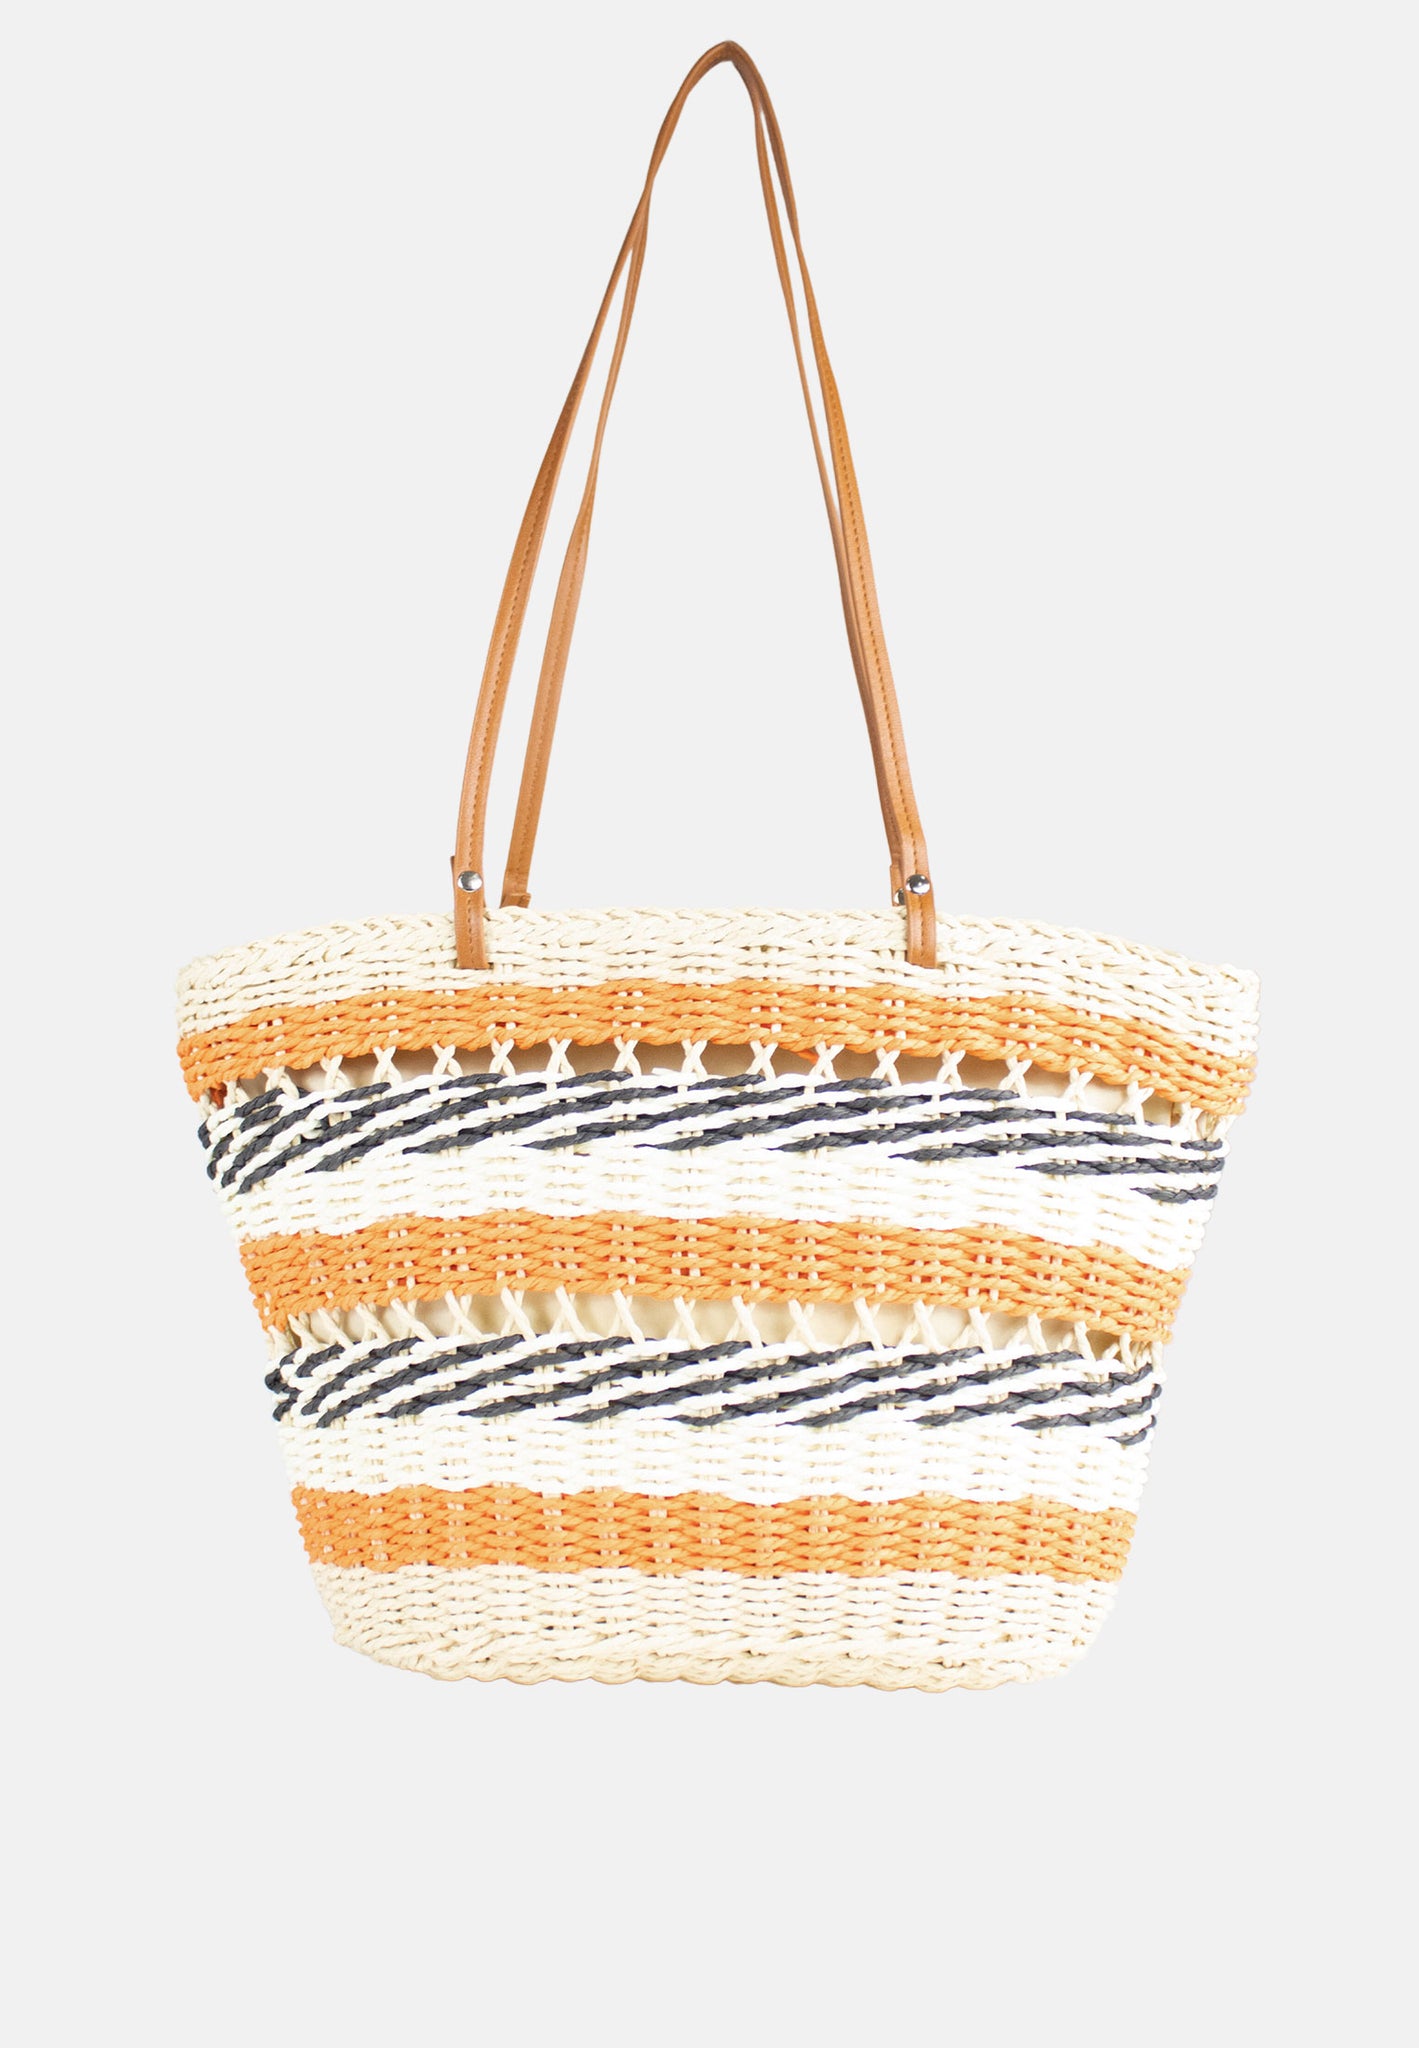 Striped shopper bag